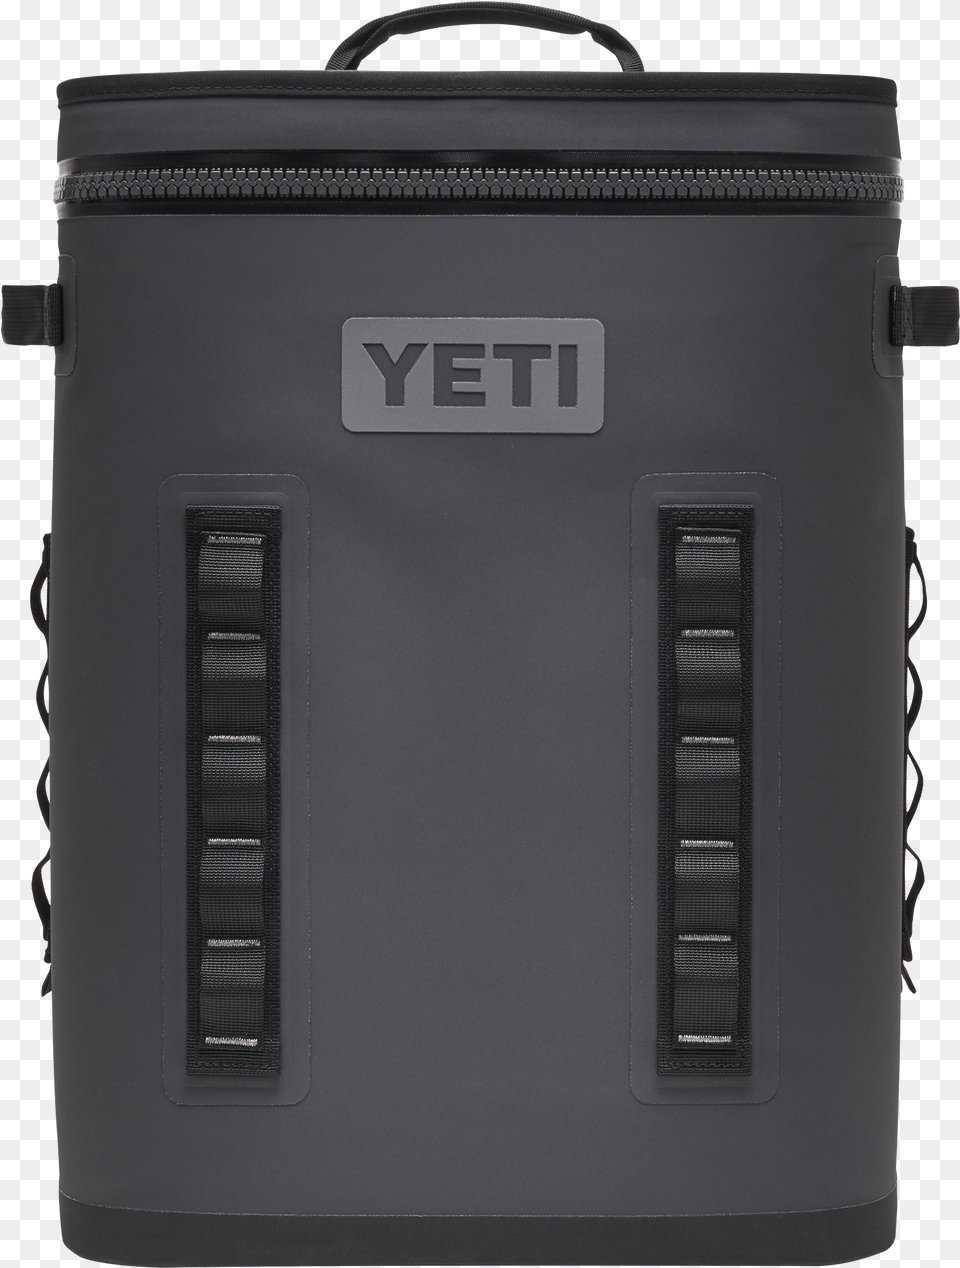 Backflip Yeti Backpack Cooler Charcoal, Mailbox, Bag Free Transparent Png